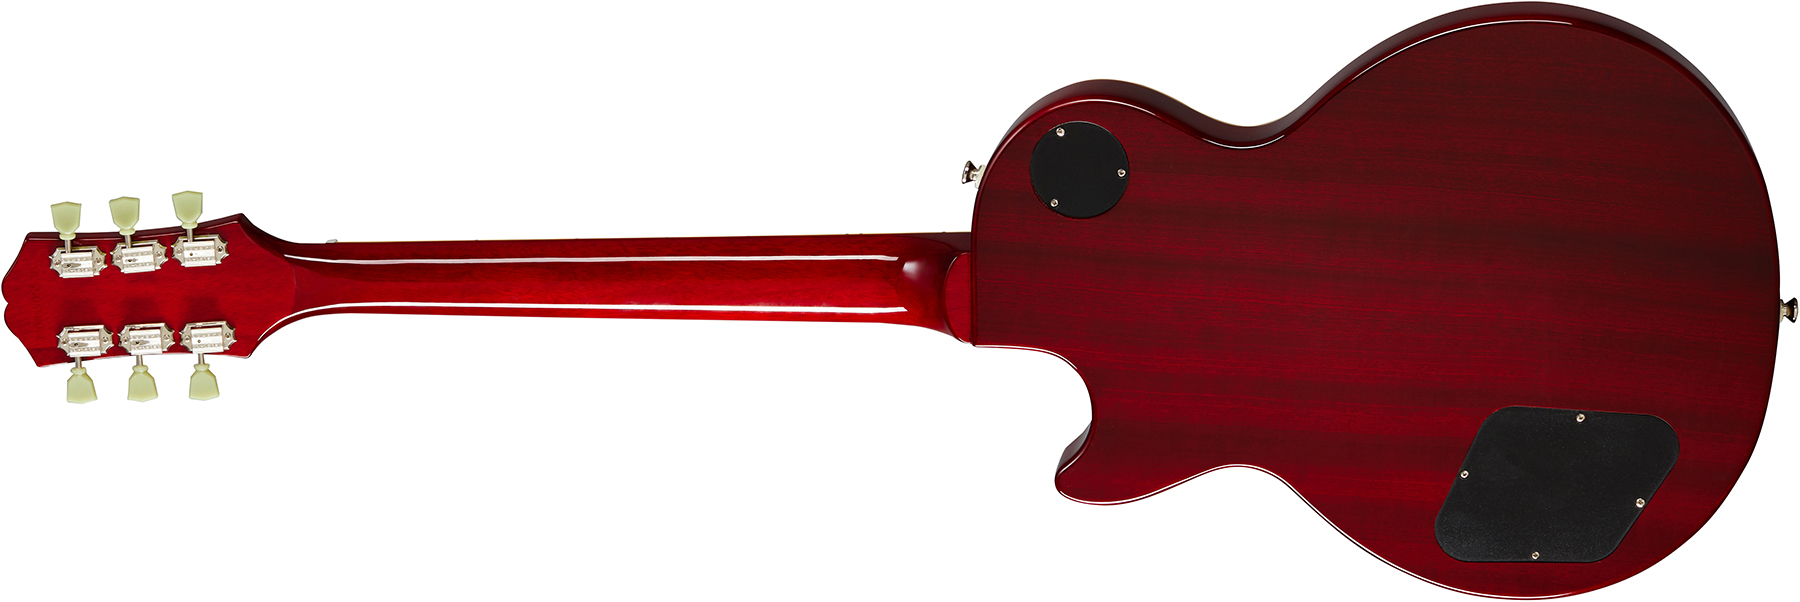 Epiphone Les Paul Standard 50s 2h Ht Rw - Heritage Cherry Sunburst - Enkel gesneden elektrische gitaar - Variation 1